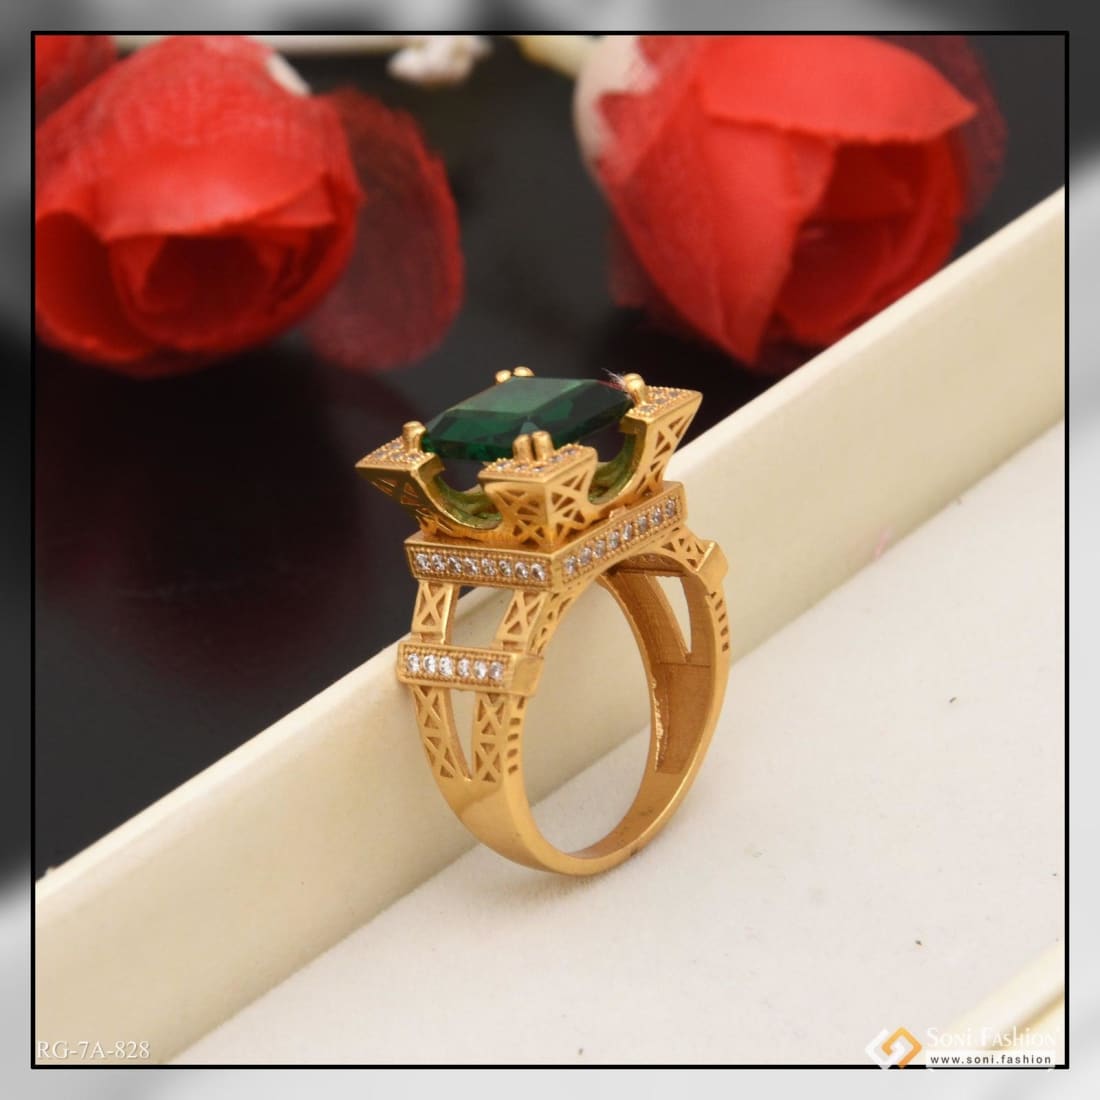 LMDPRAJAPATIS 6.25 Ratti 5.50 Carat Original Emerald Gemstone Adjustable  Gold Beautiful Design Ring For Women's : Amazon.in: Fashion